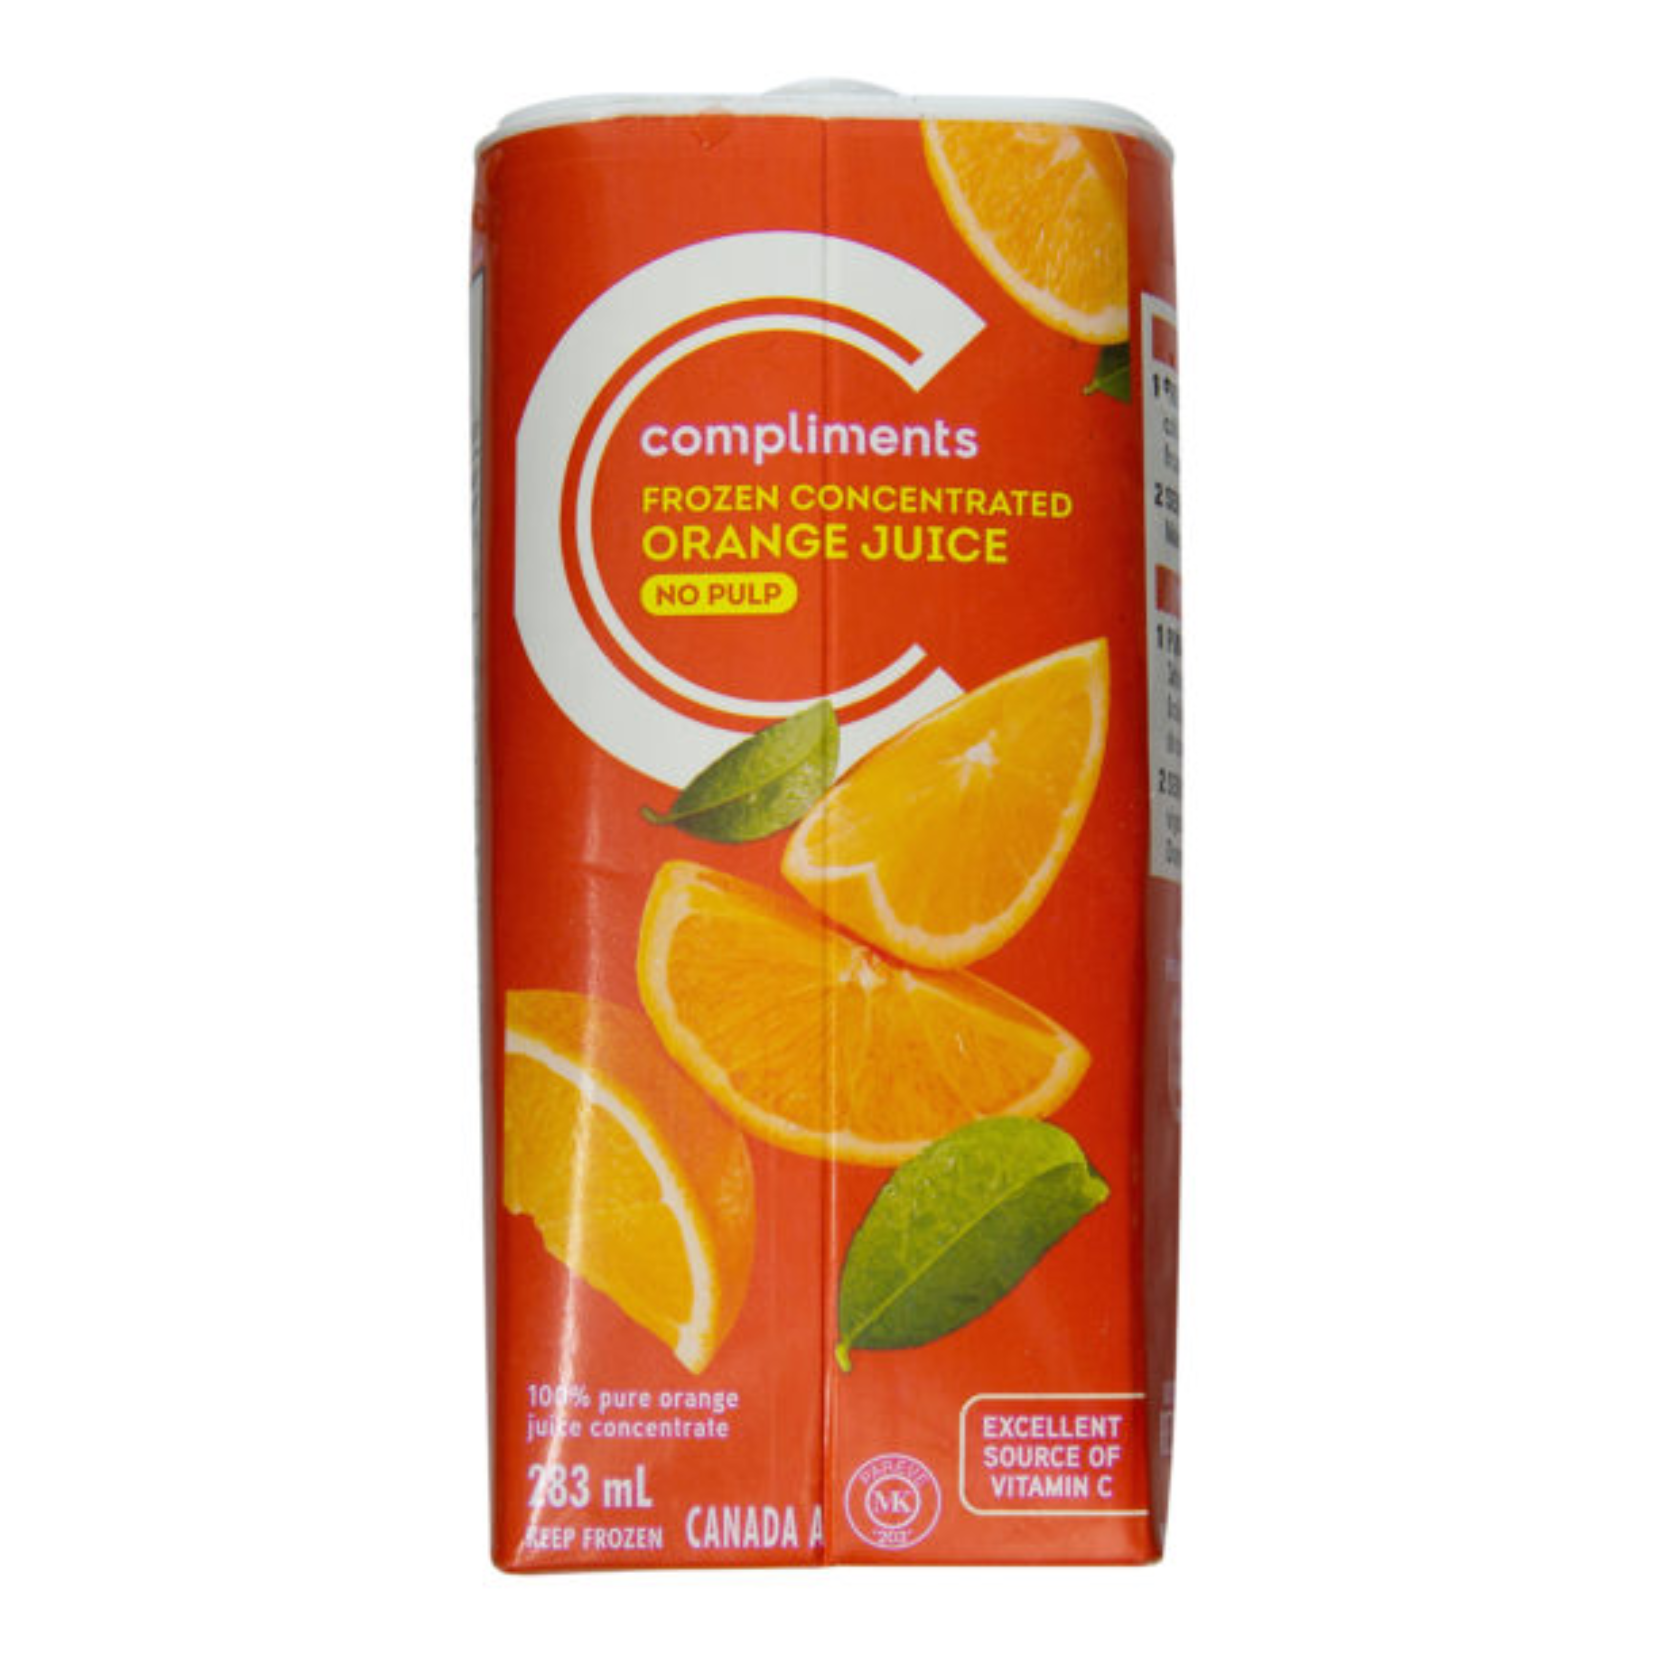 Compliments Frozen No Pulp Orange Juice 283 ml